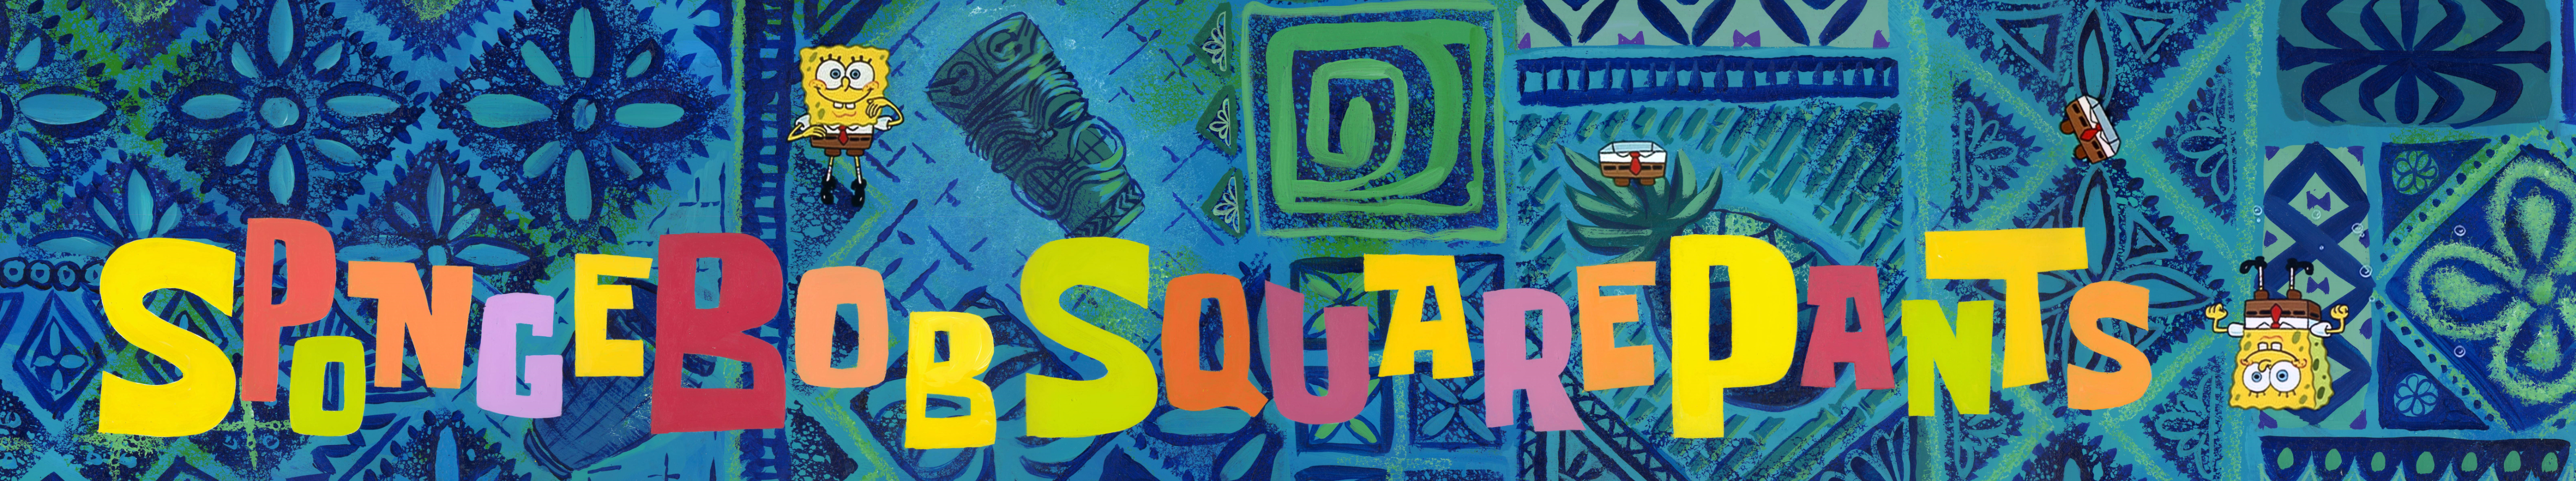 spongebob squarepants theme song